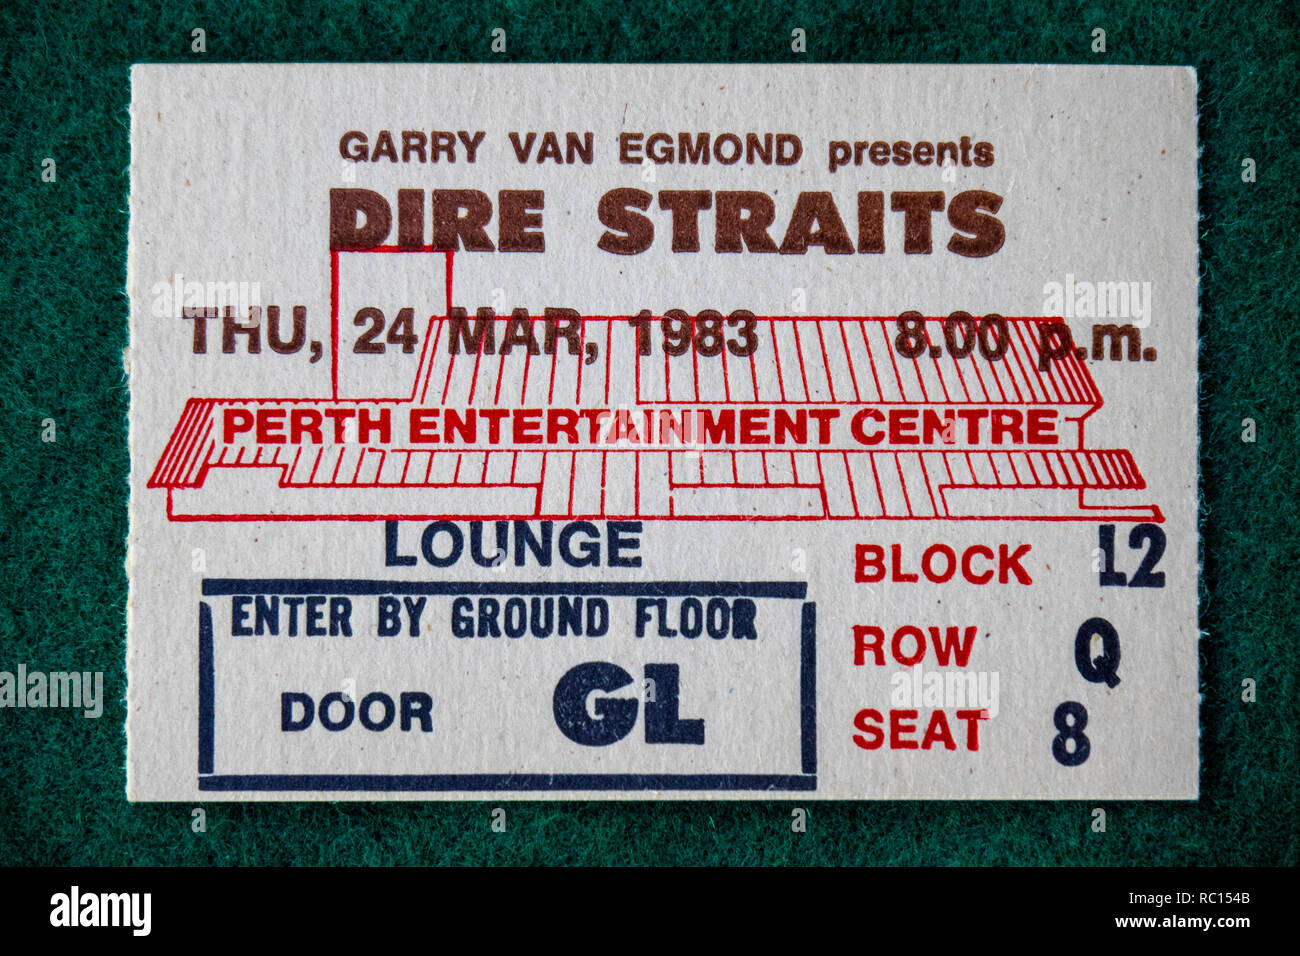 Ticket for Dire Straits concert at Perth Entertainment Centre in 1983 WA Australia. Stock Photo